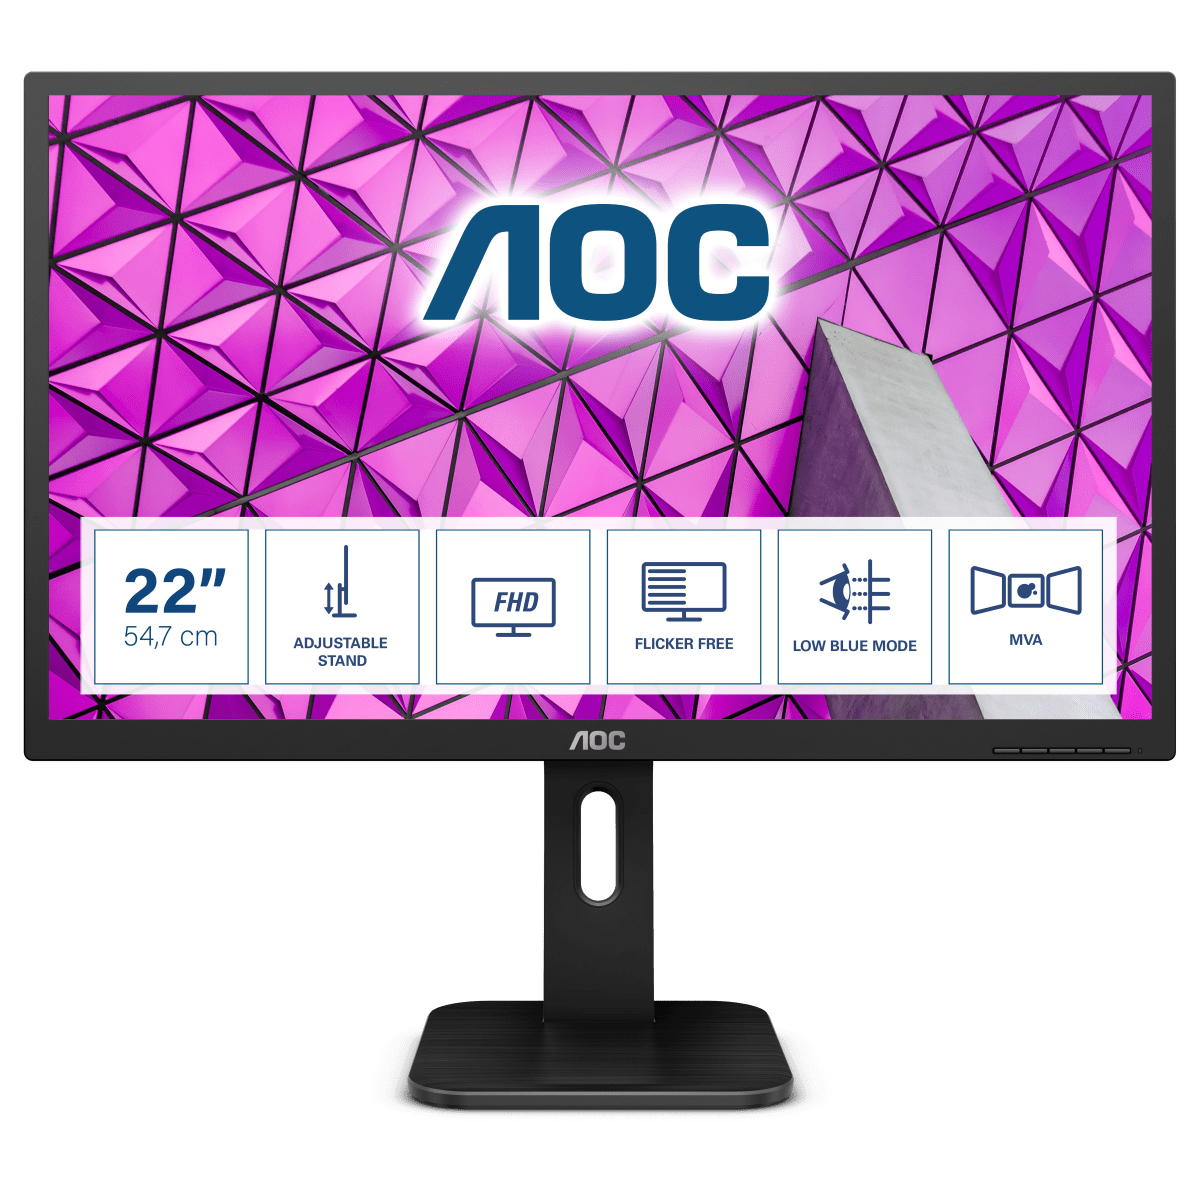 AOC P1 22P1 computer monitor